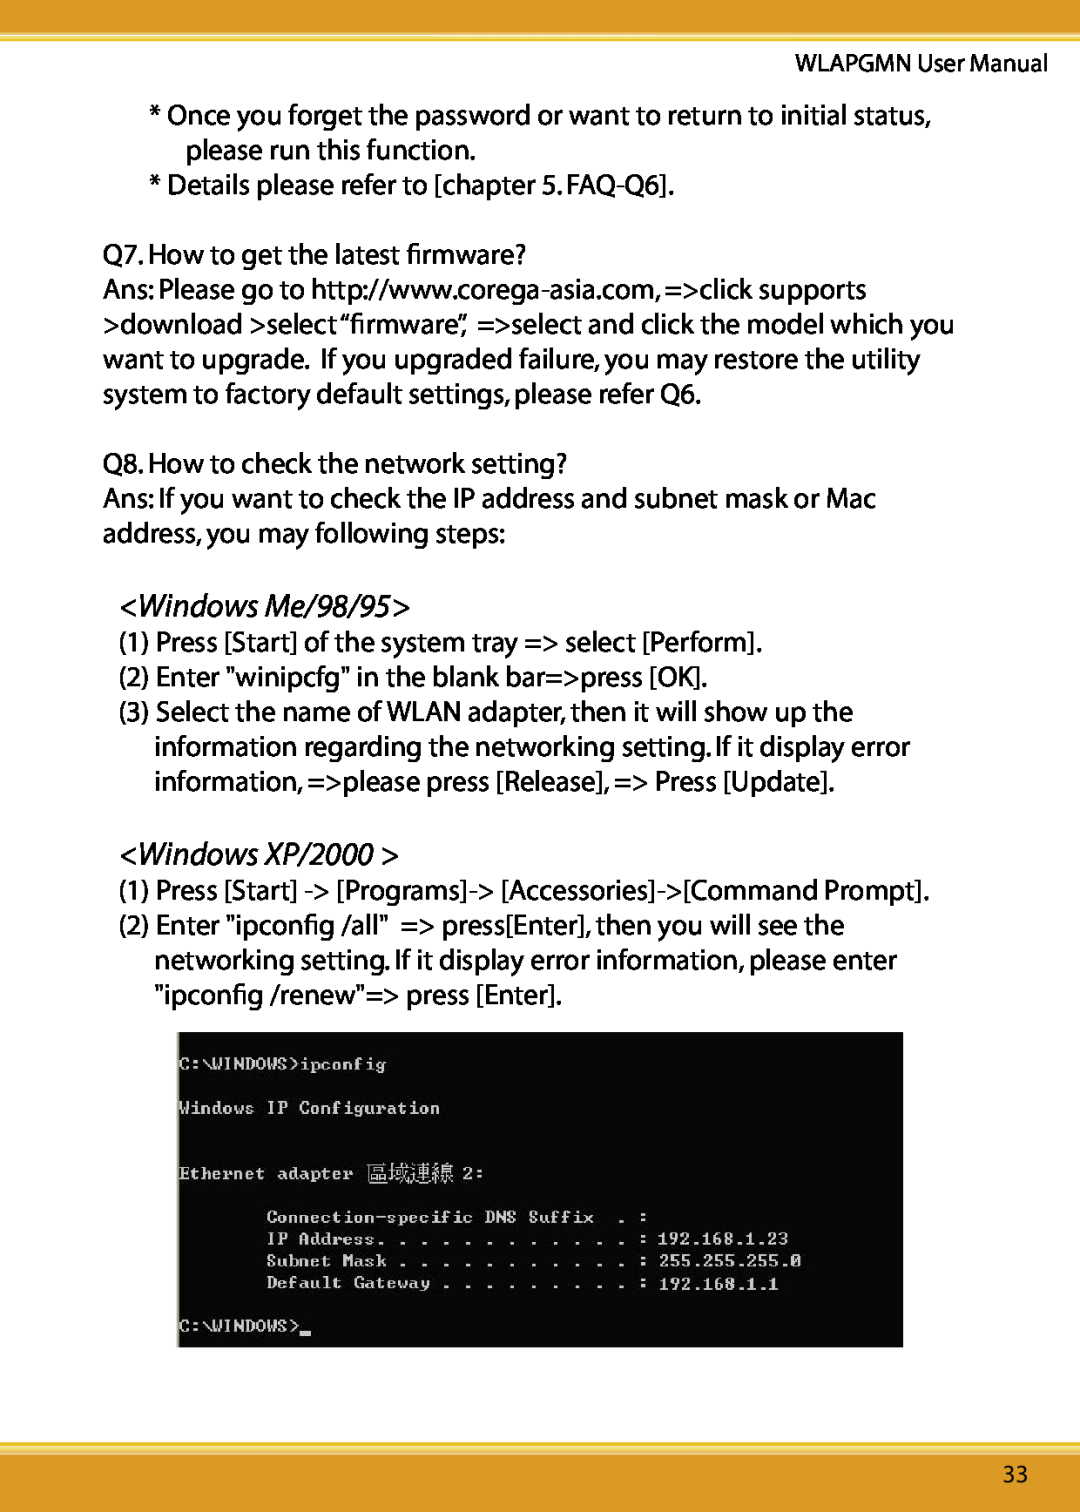 Corega CG-WLAPGMN user manual Windows Me/98/95, Windows XP/2000 